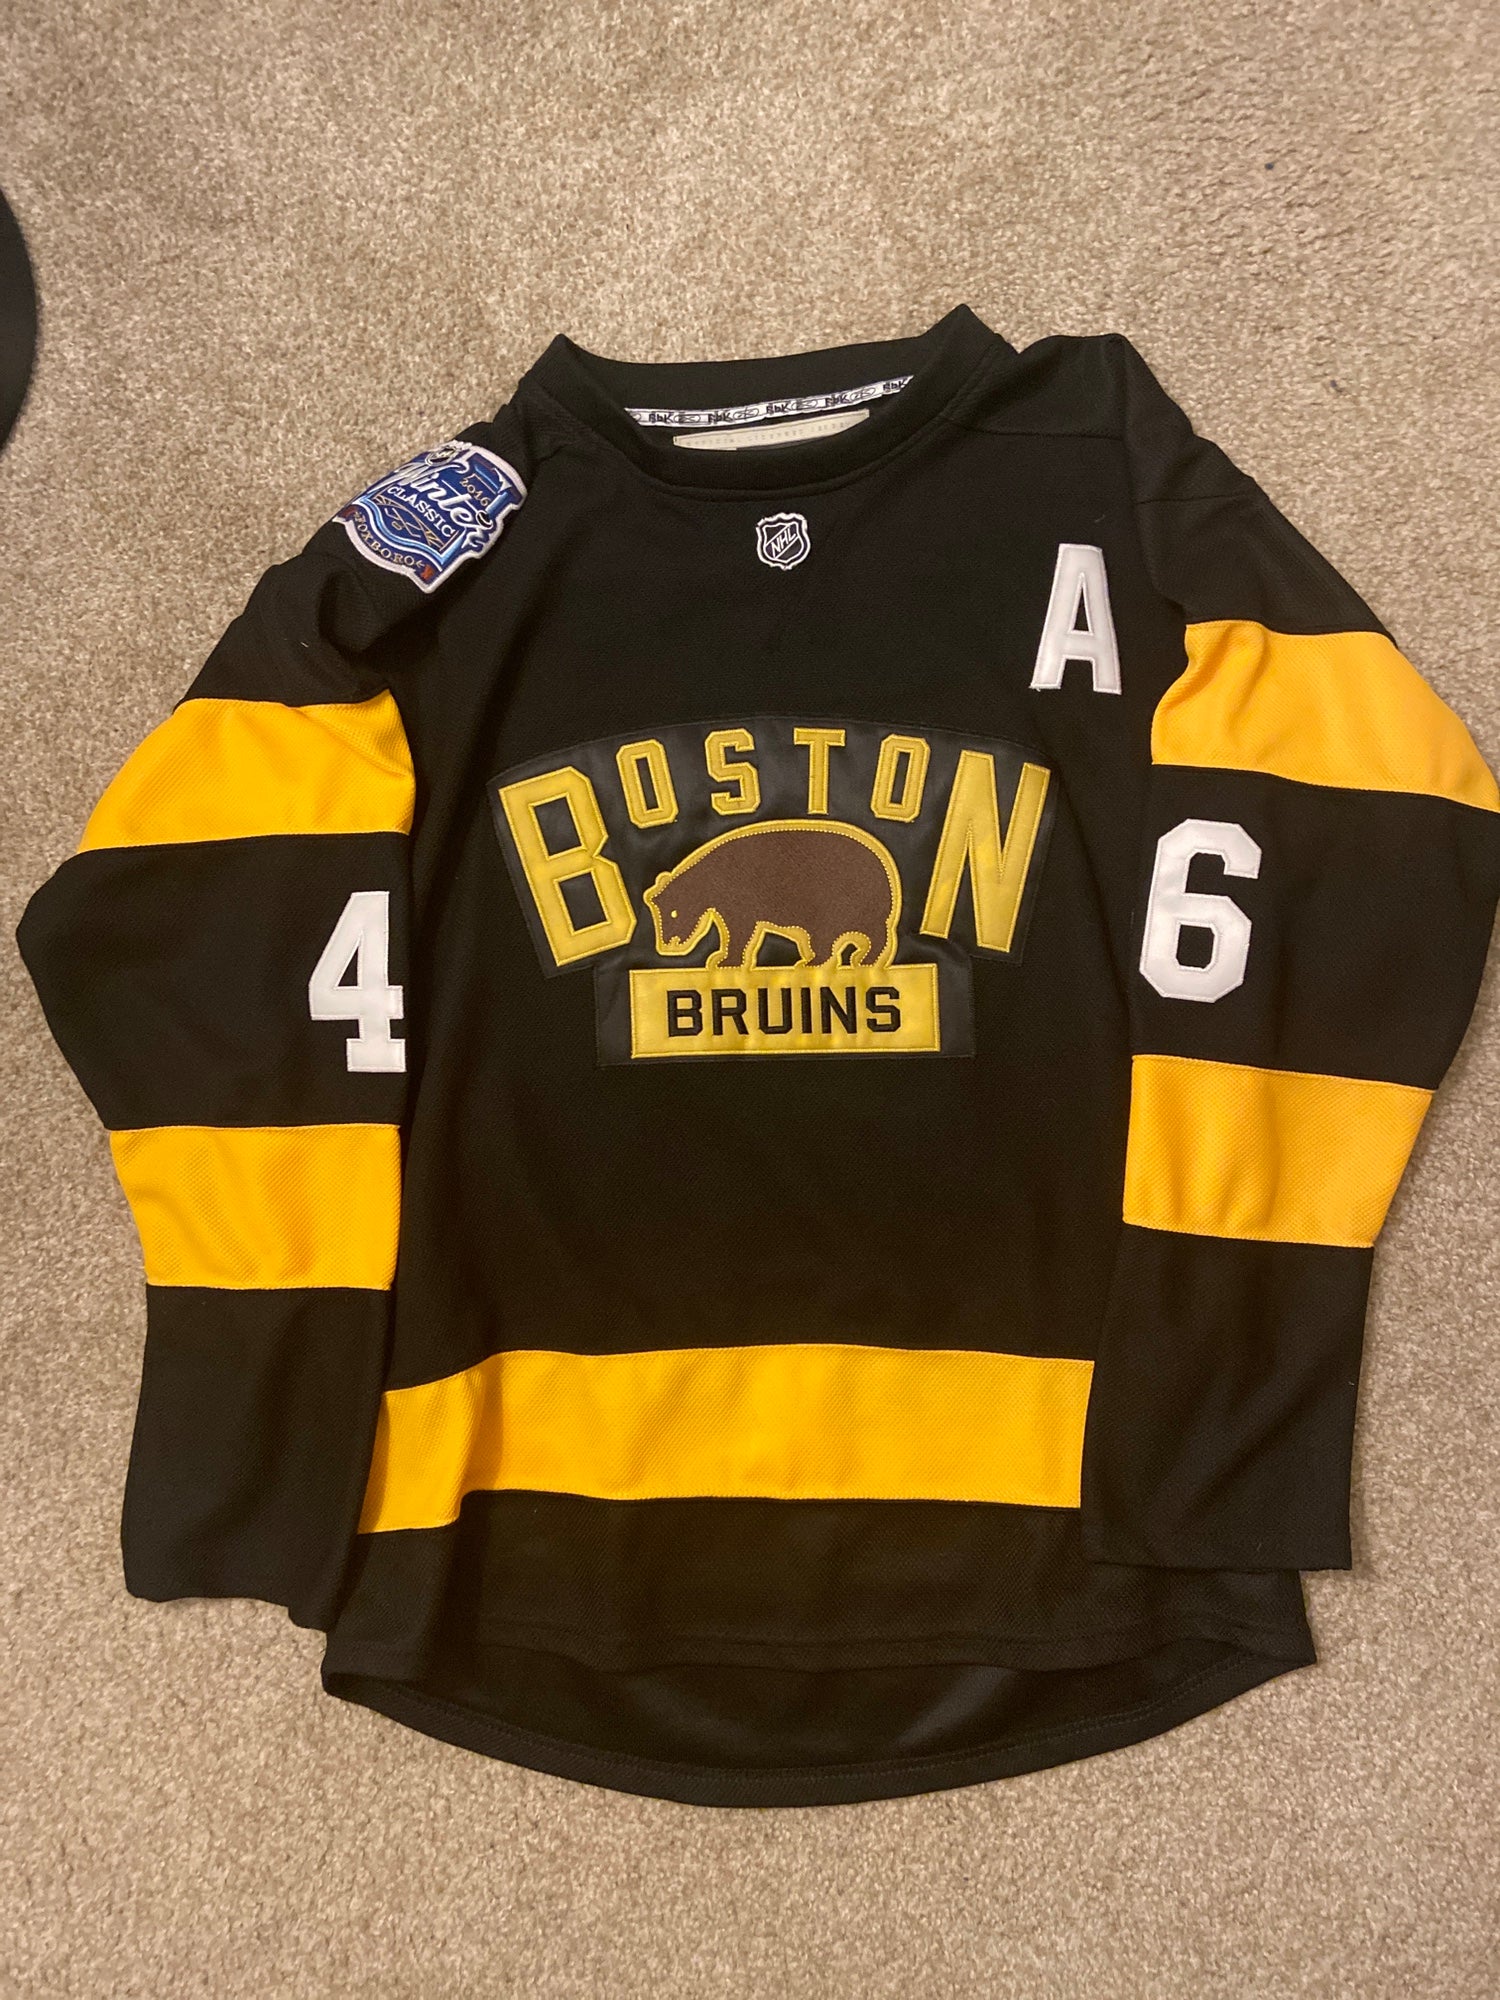 Bruins Winter Classic Jersey